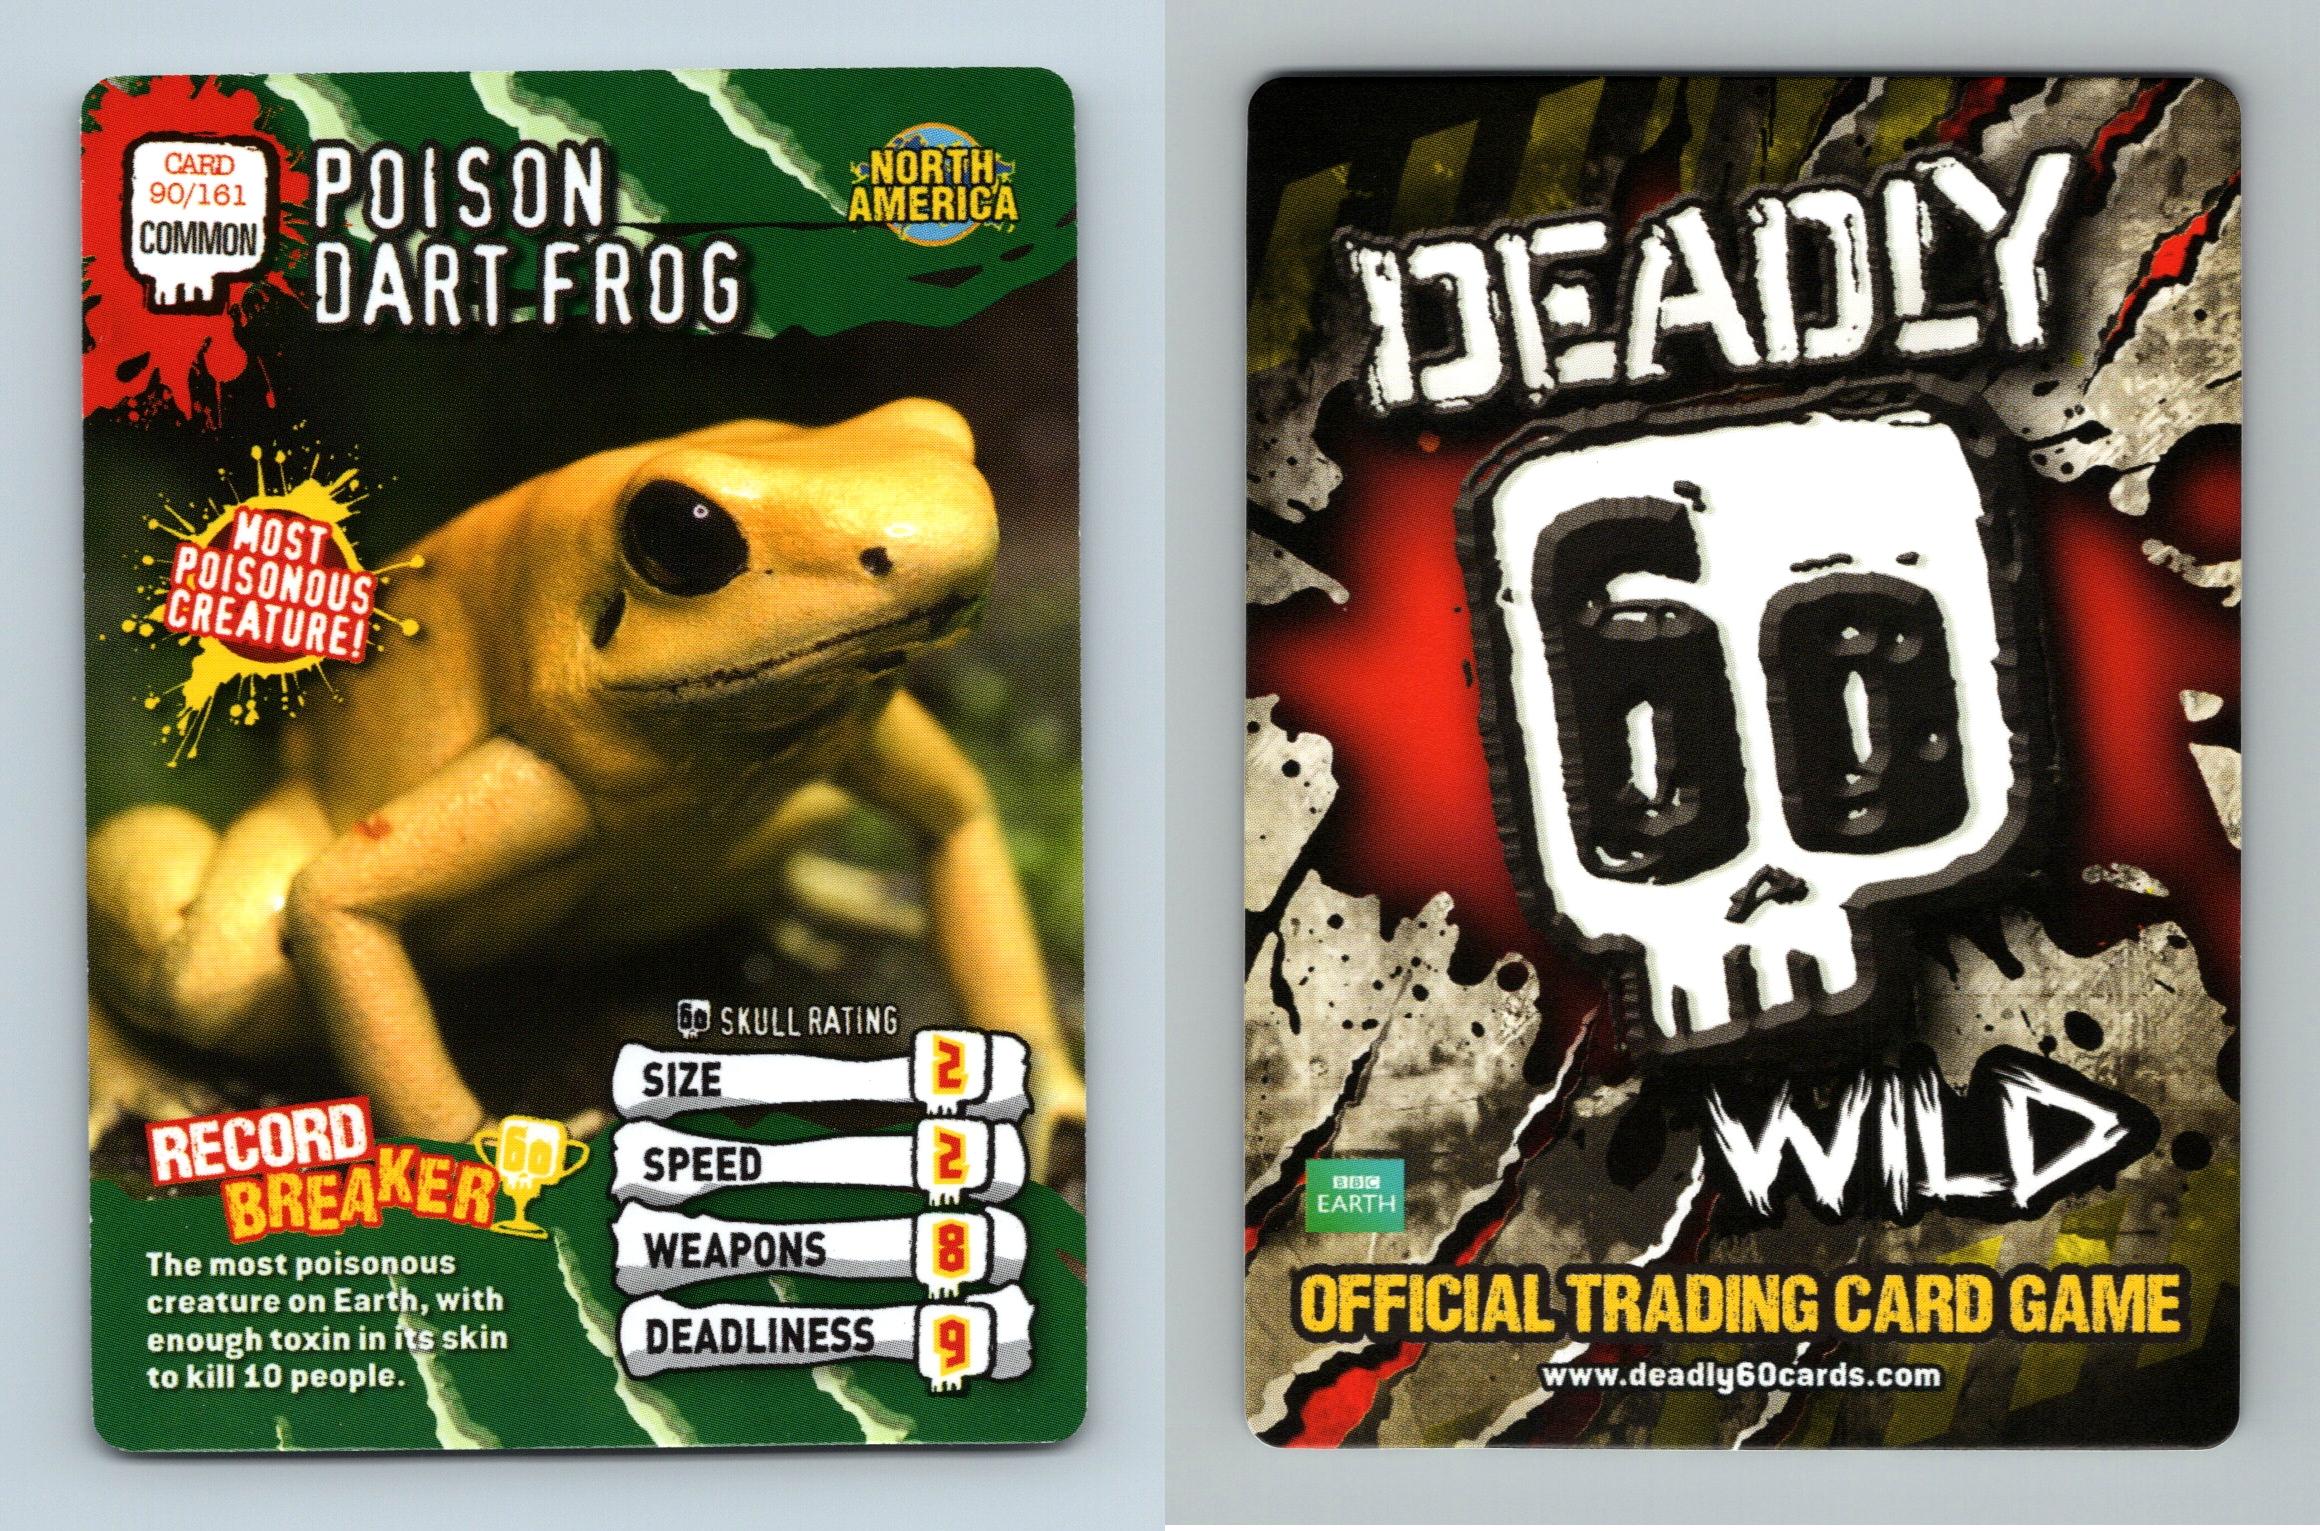 Deadly　TCG　Wild　Poison　Frog　60　Common　Dart　Card　#90/161　2008